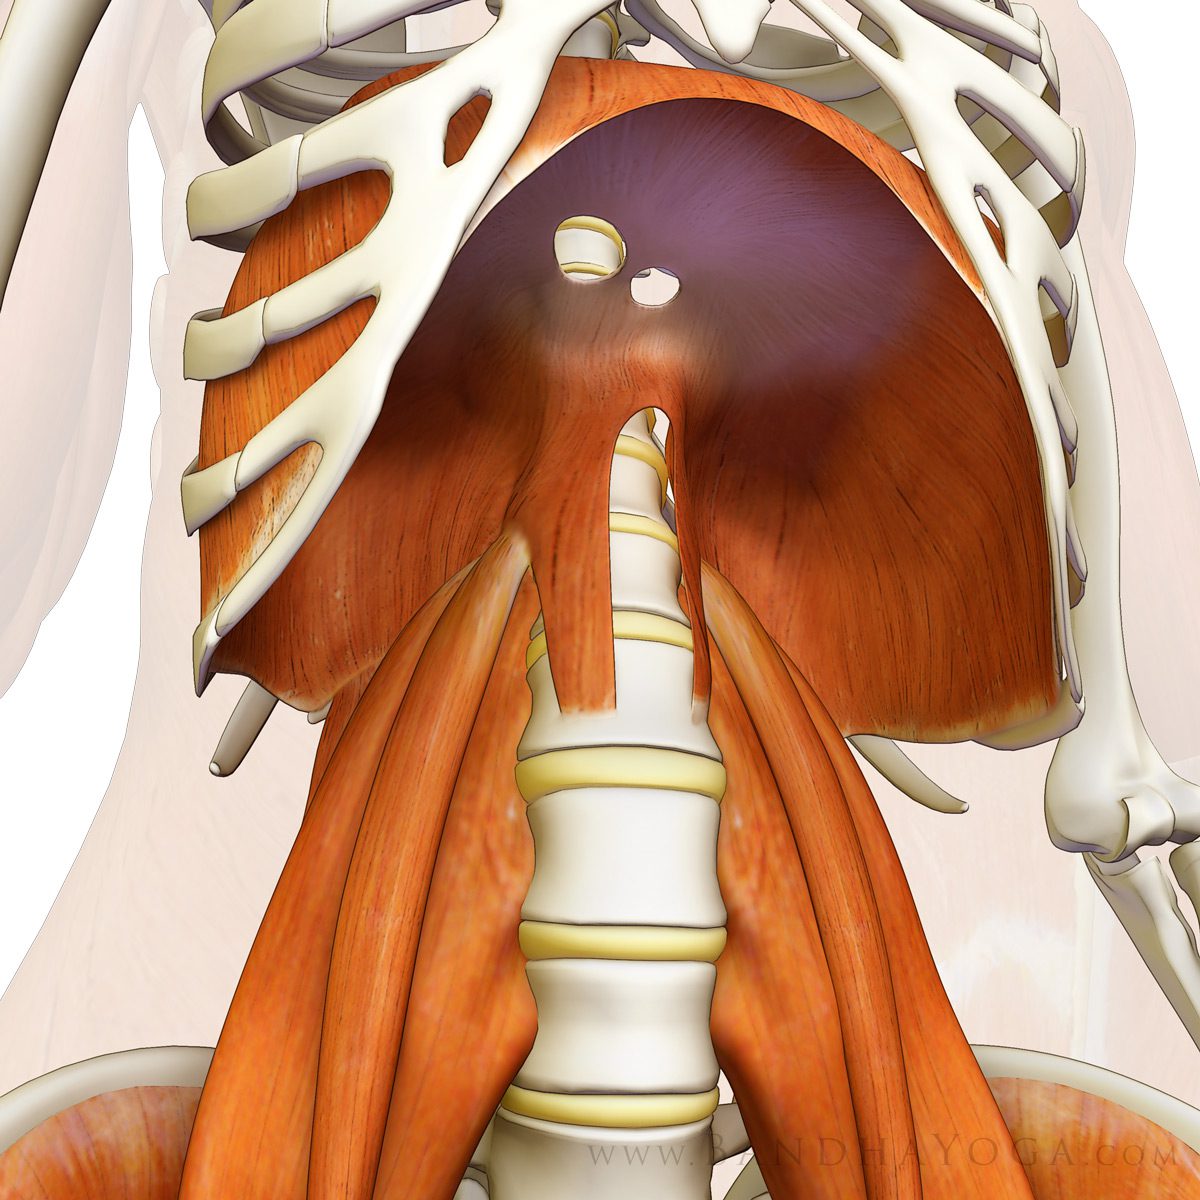 diaphragm muscle attachments